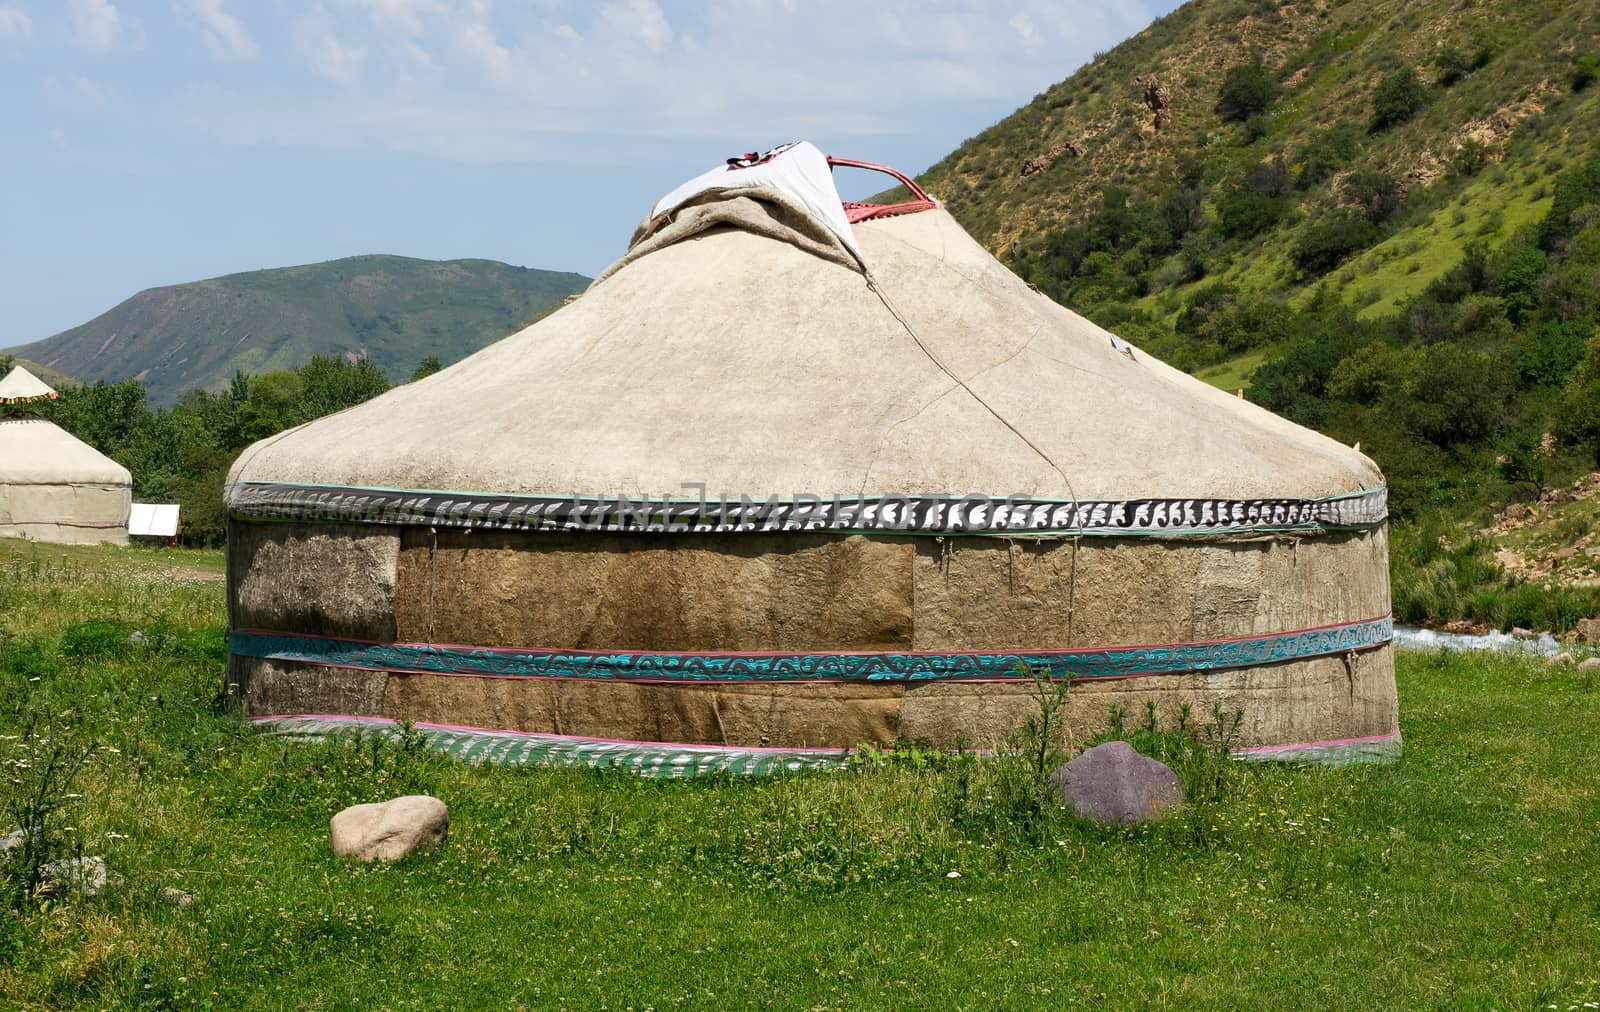 Kazakh Ger Camp tent yurt by Venakr